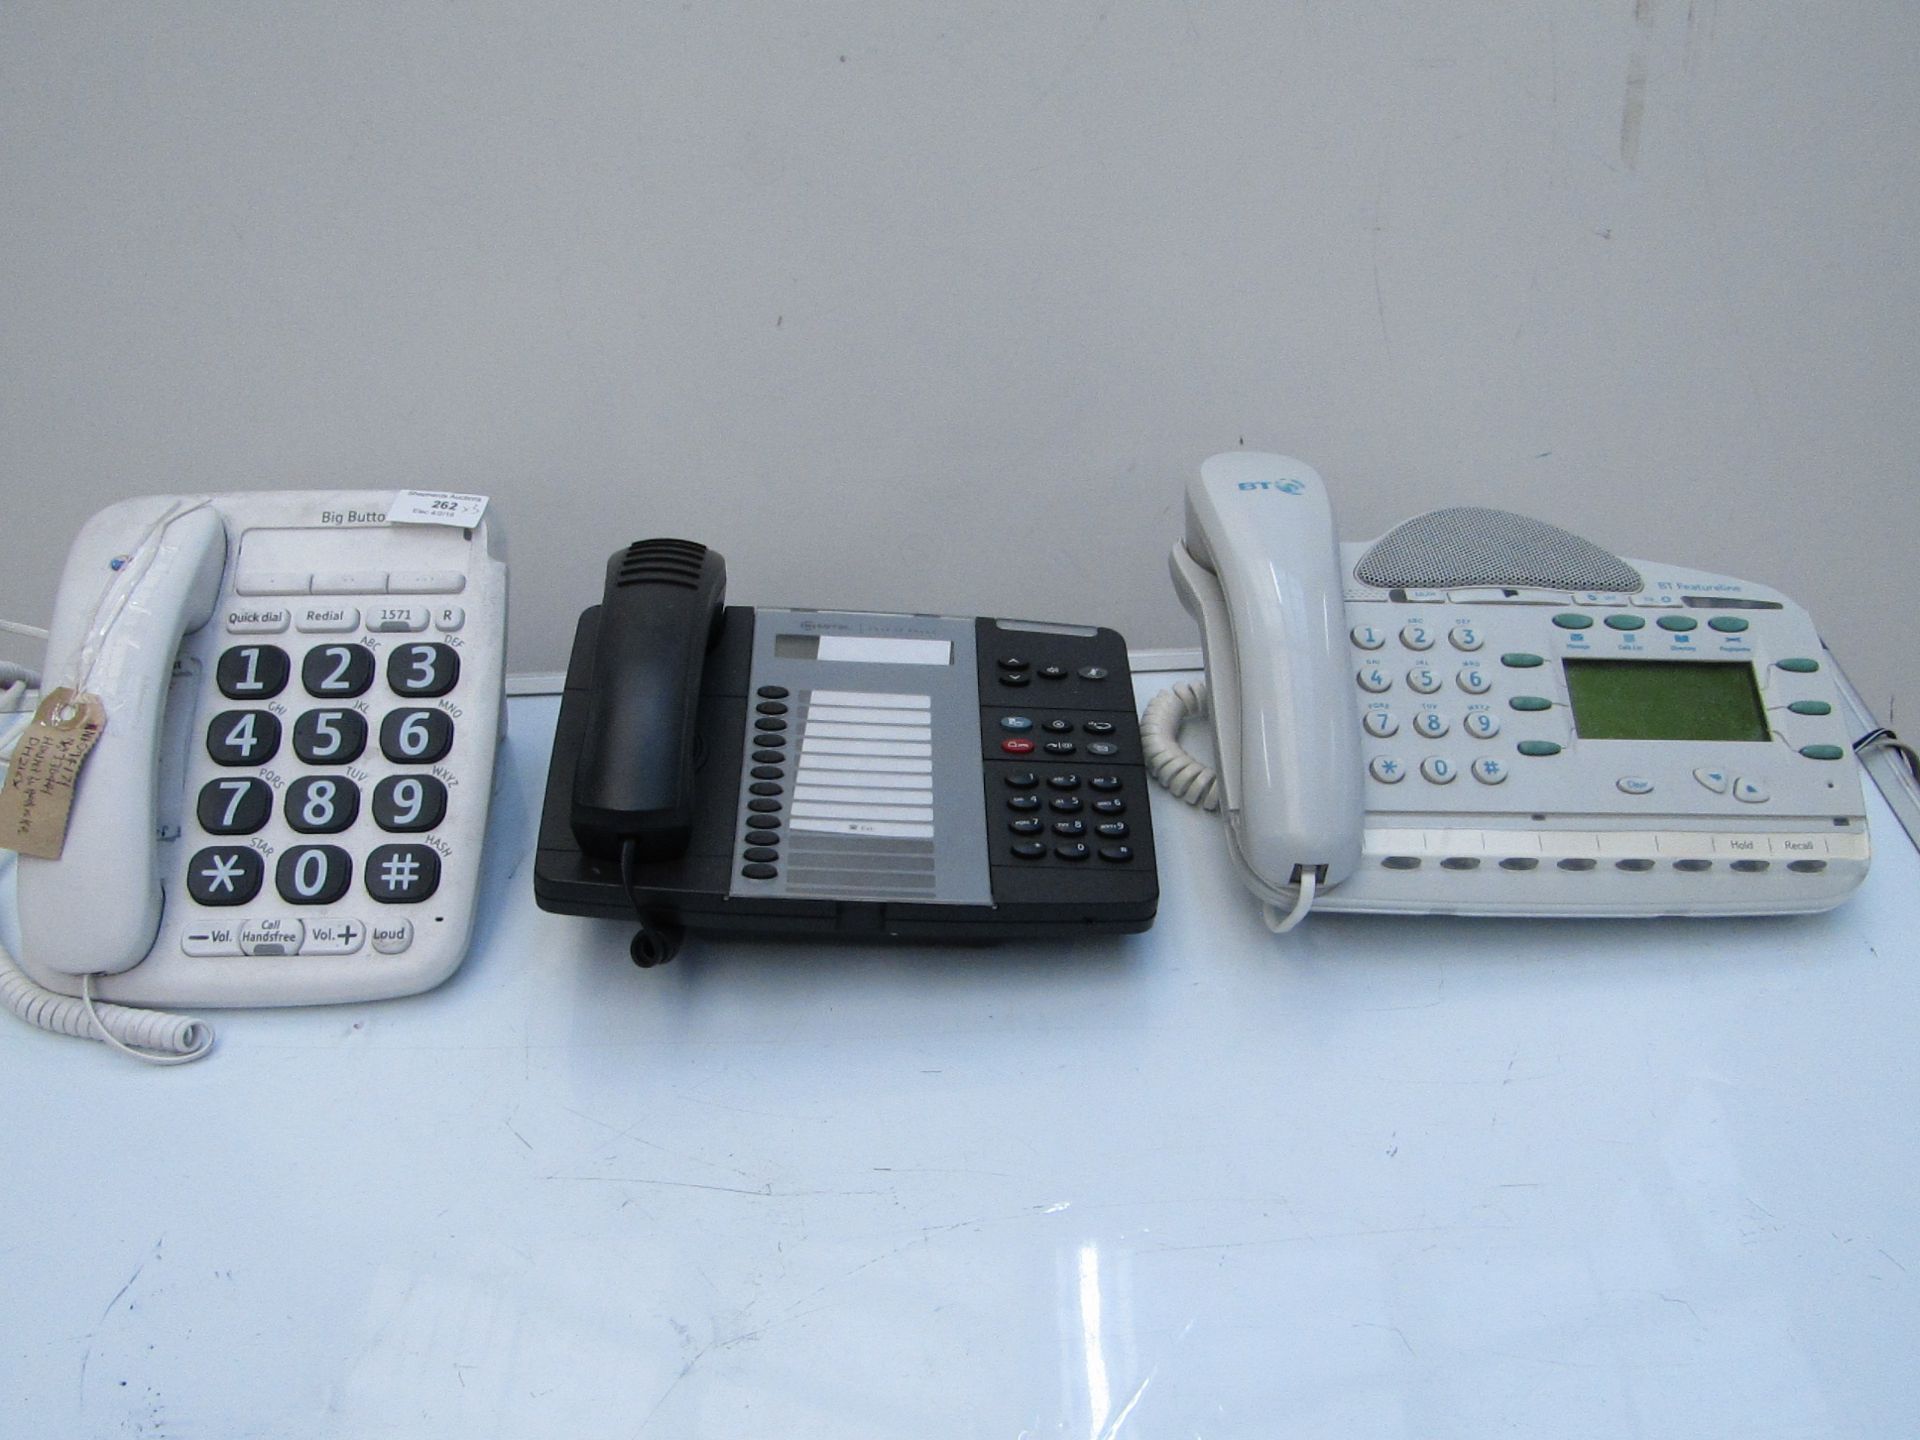 Lot includes: BT Featureline office telephone, Mitel office telephone, big button telephone. All